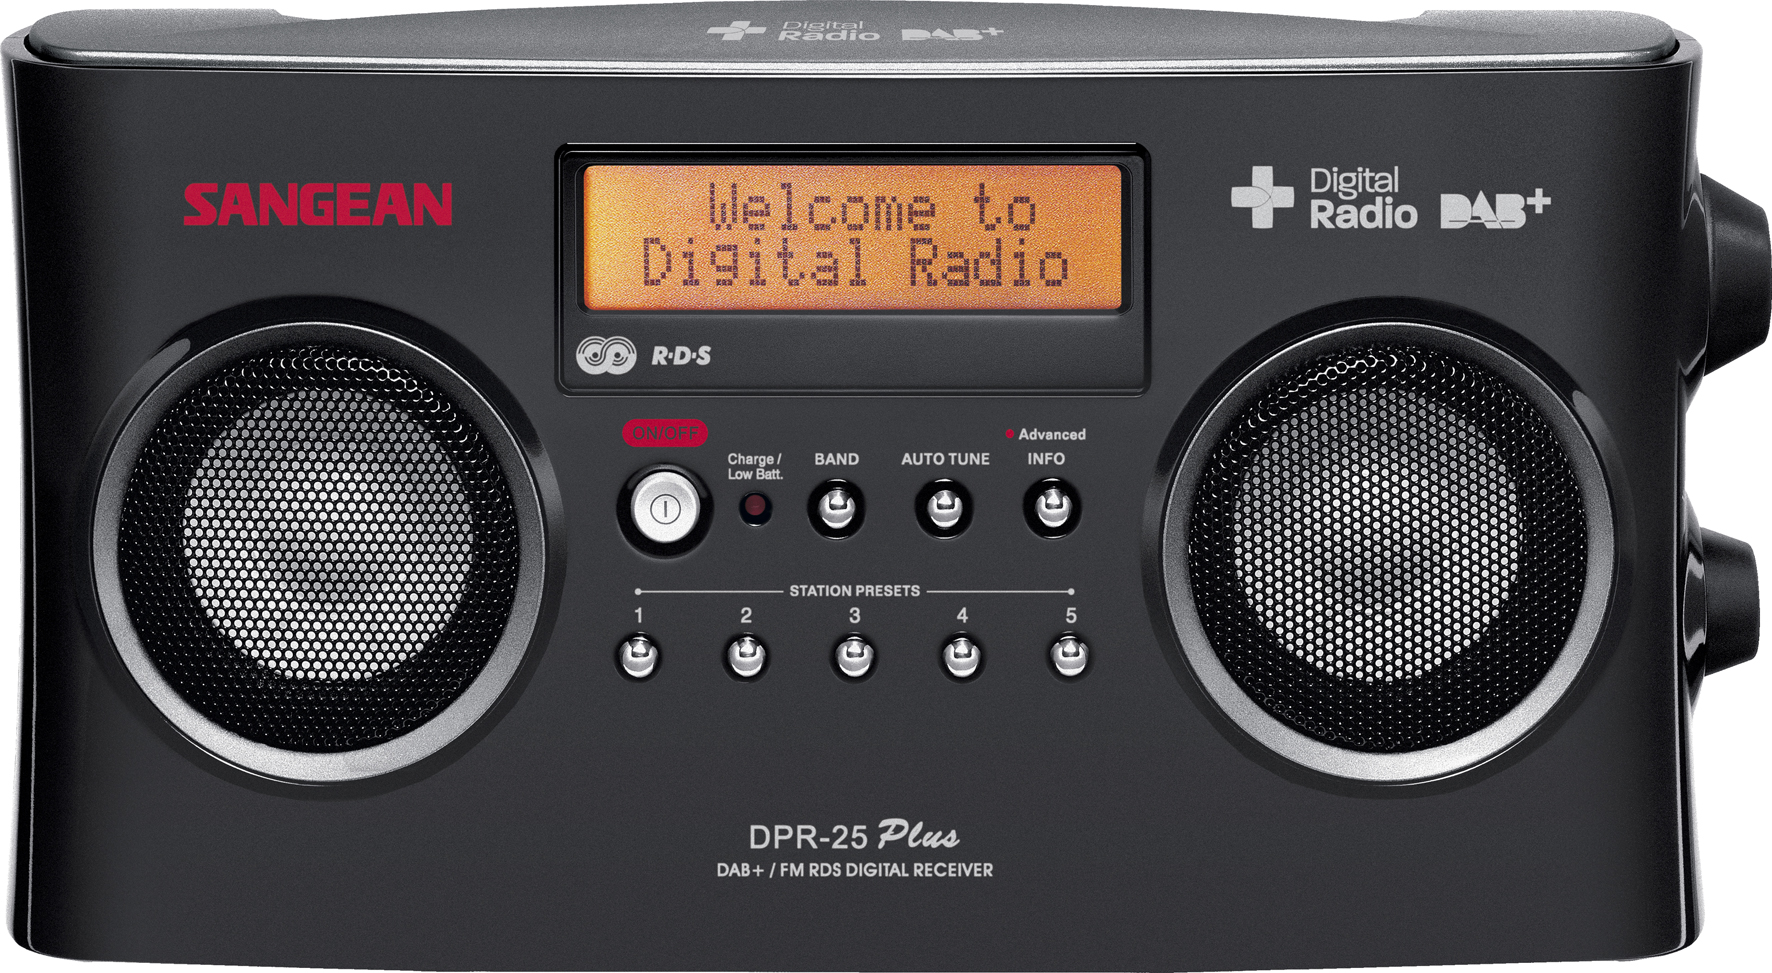 DPR-25+, radio numrique, stereo, DAB+, noir